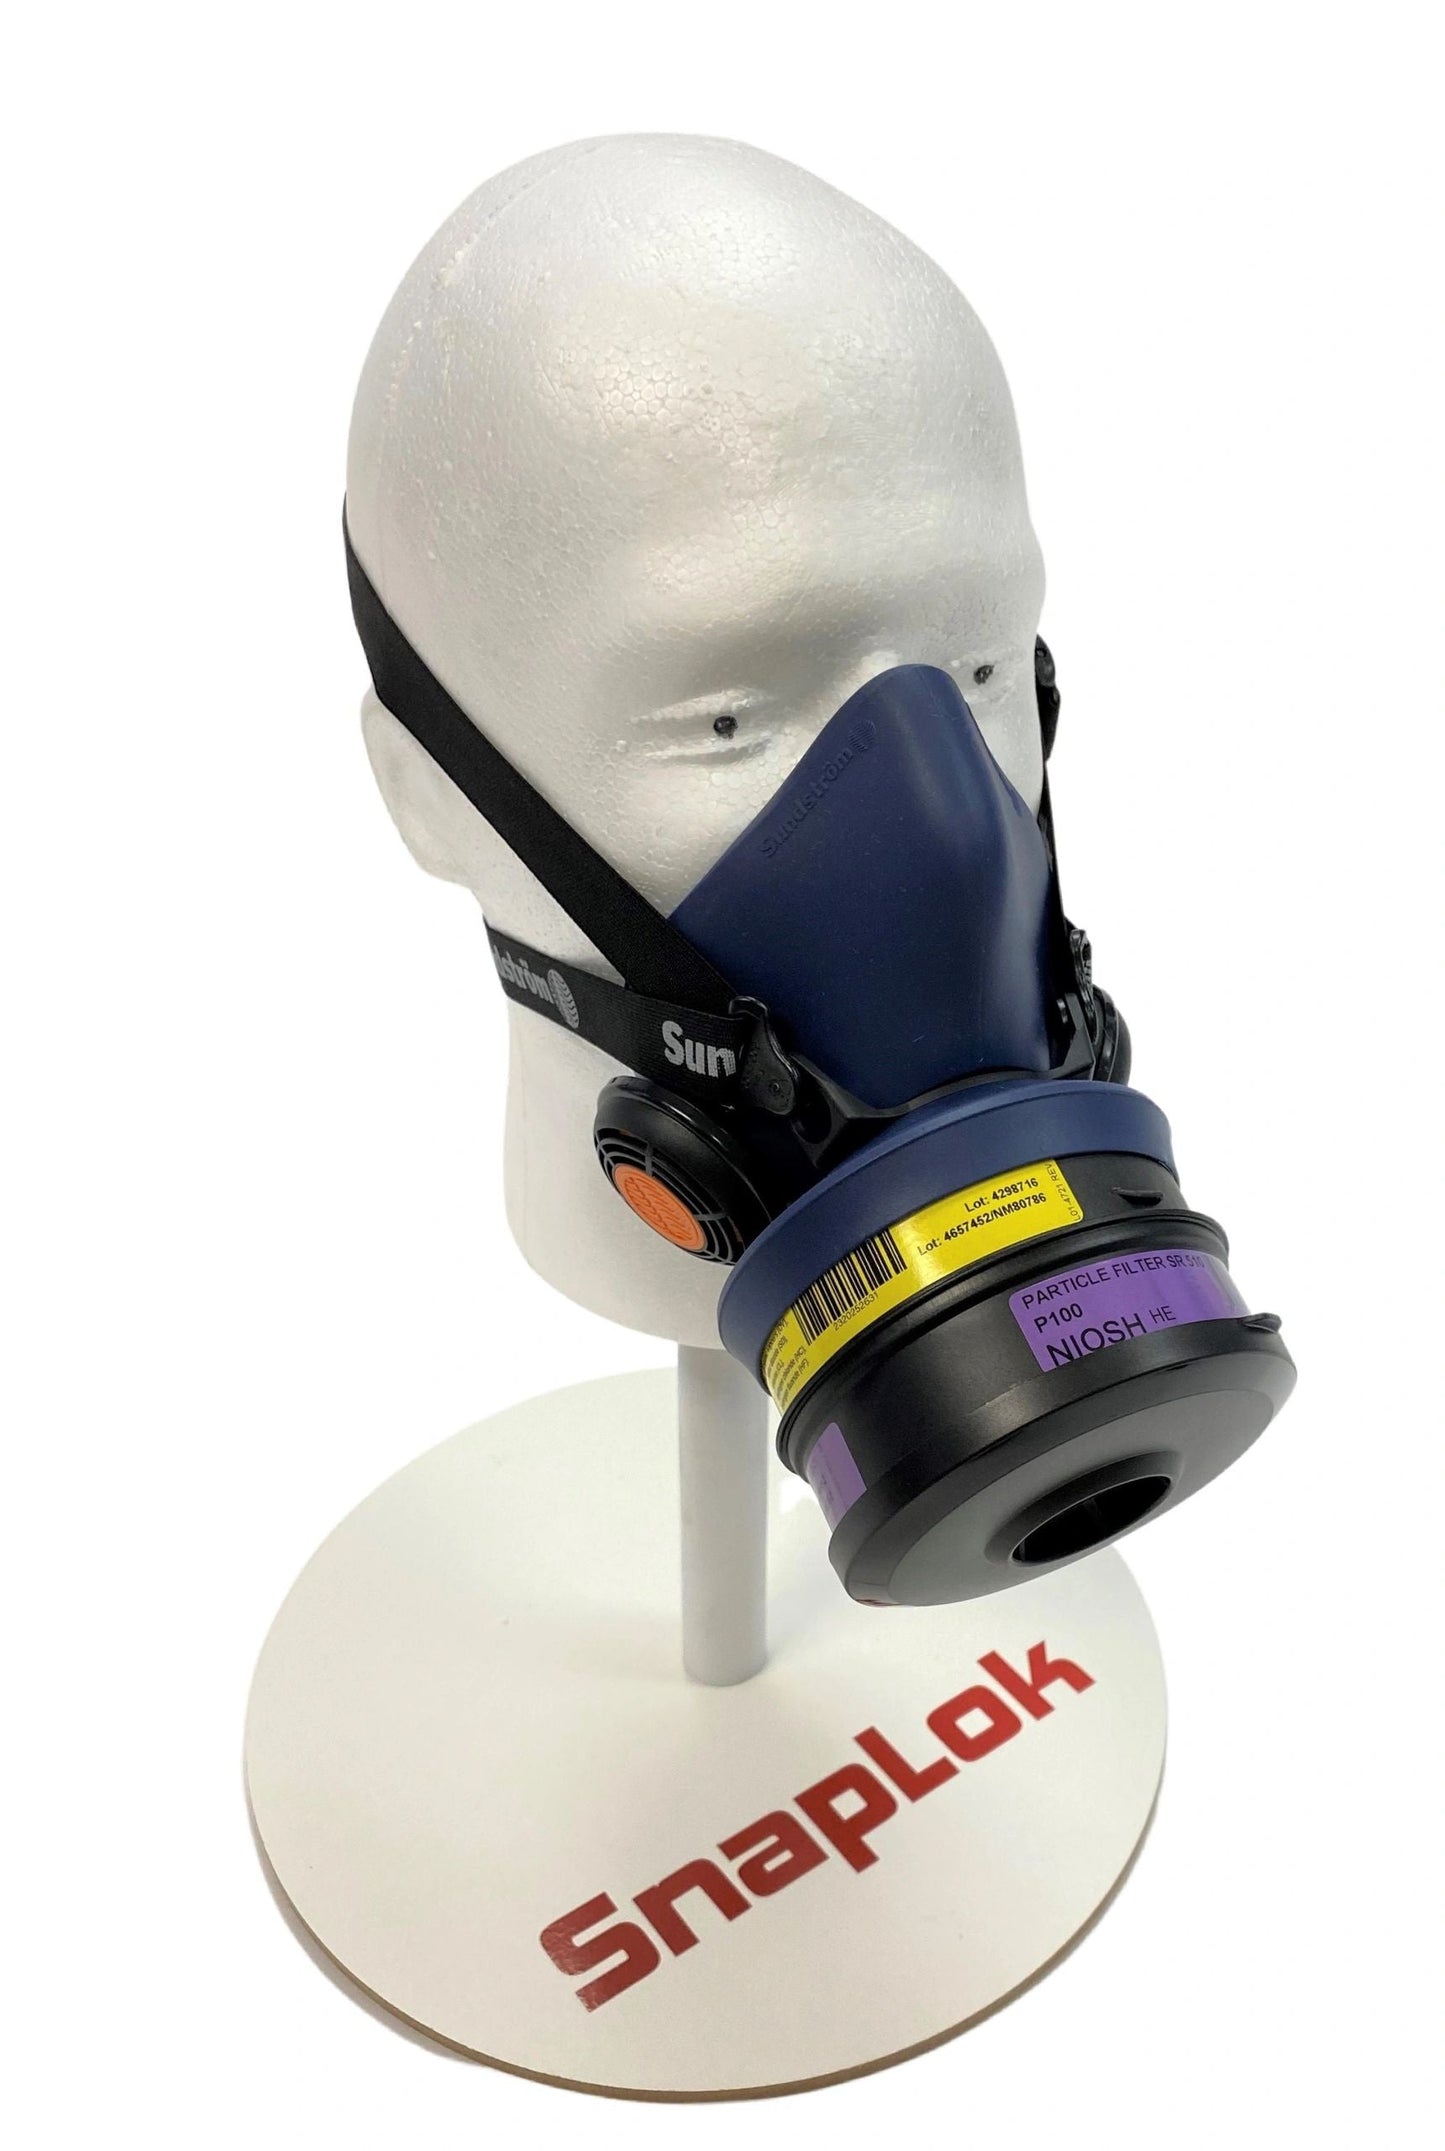 (DS) SnapLok SR-5721L - Size L/XL Half Mask (1 Pack of 100), 1-organic vapor filter, 1-particulate filter, 5-pref